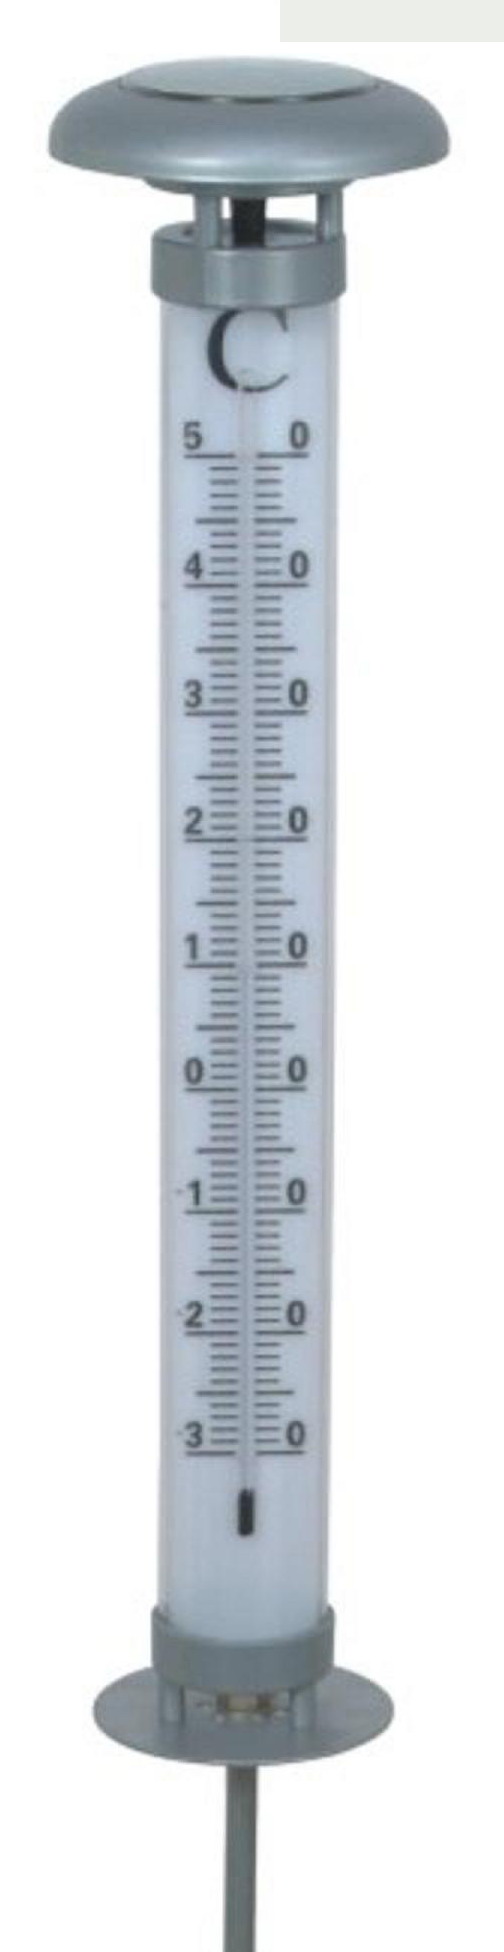  Solar Light With Thermometer (Солнечного света, термометр)